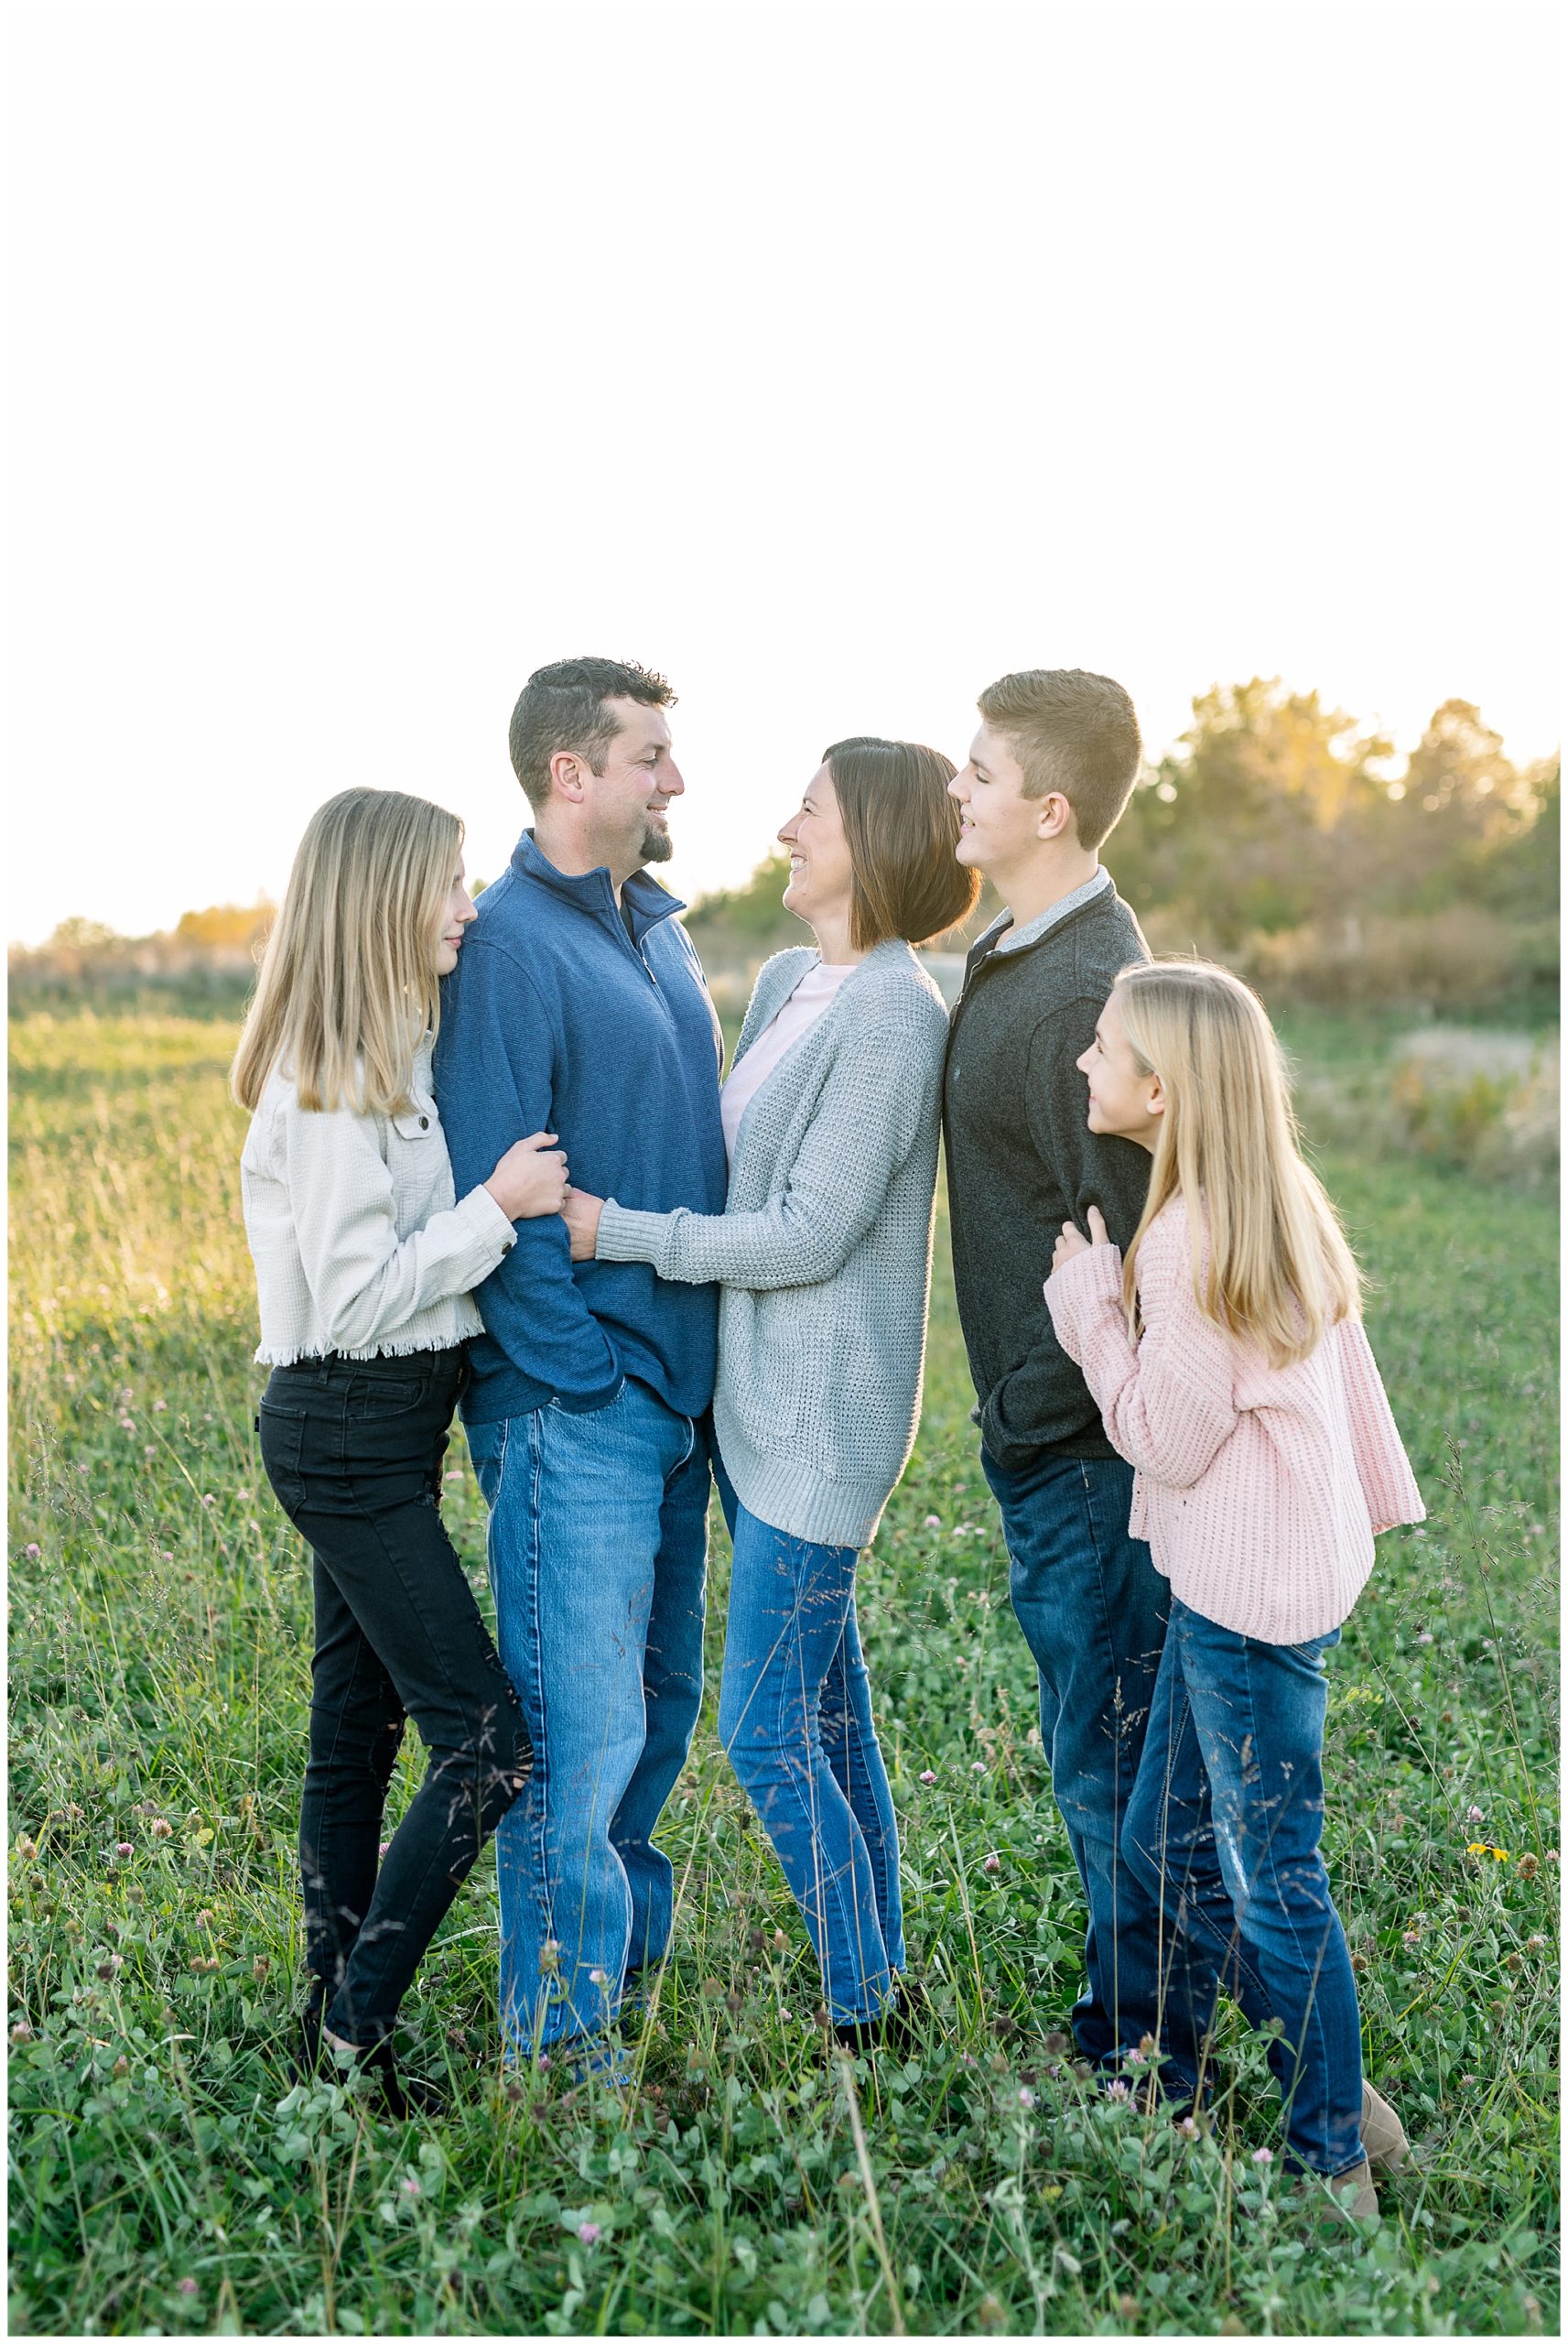 fall family photo session